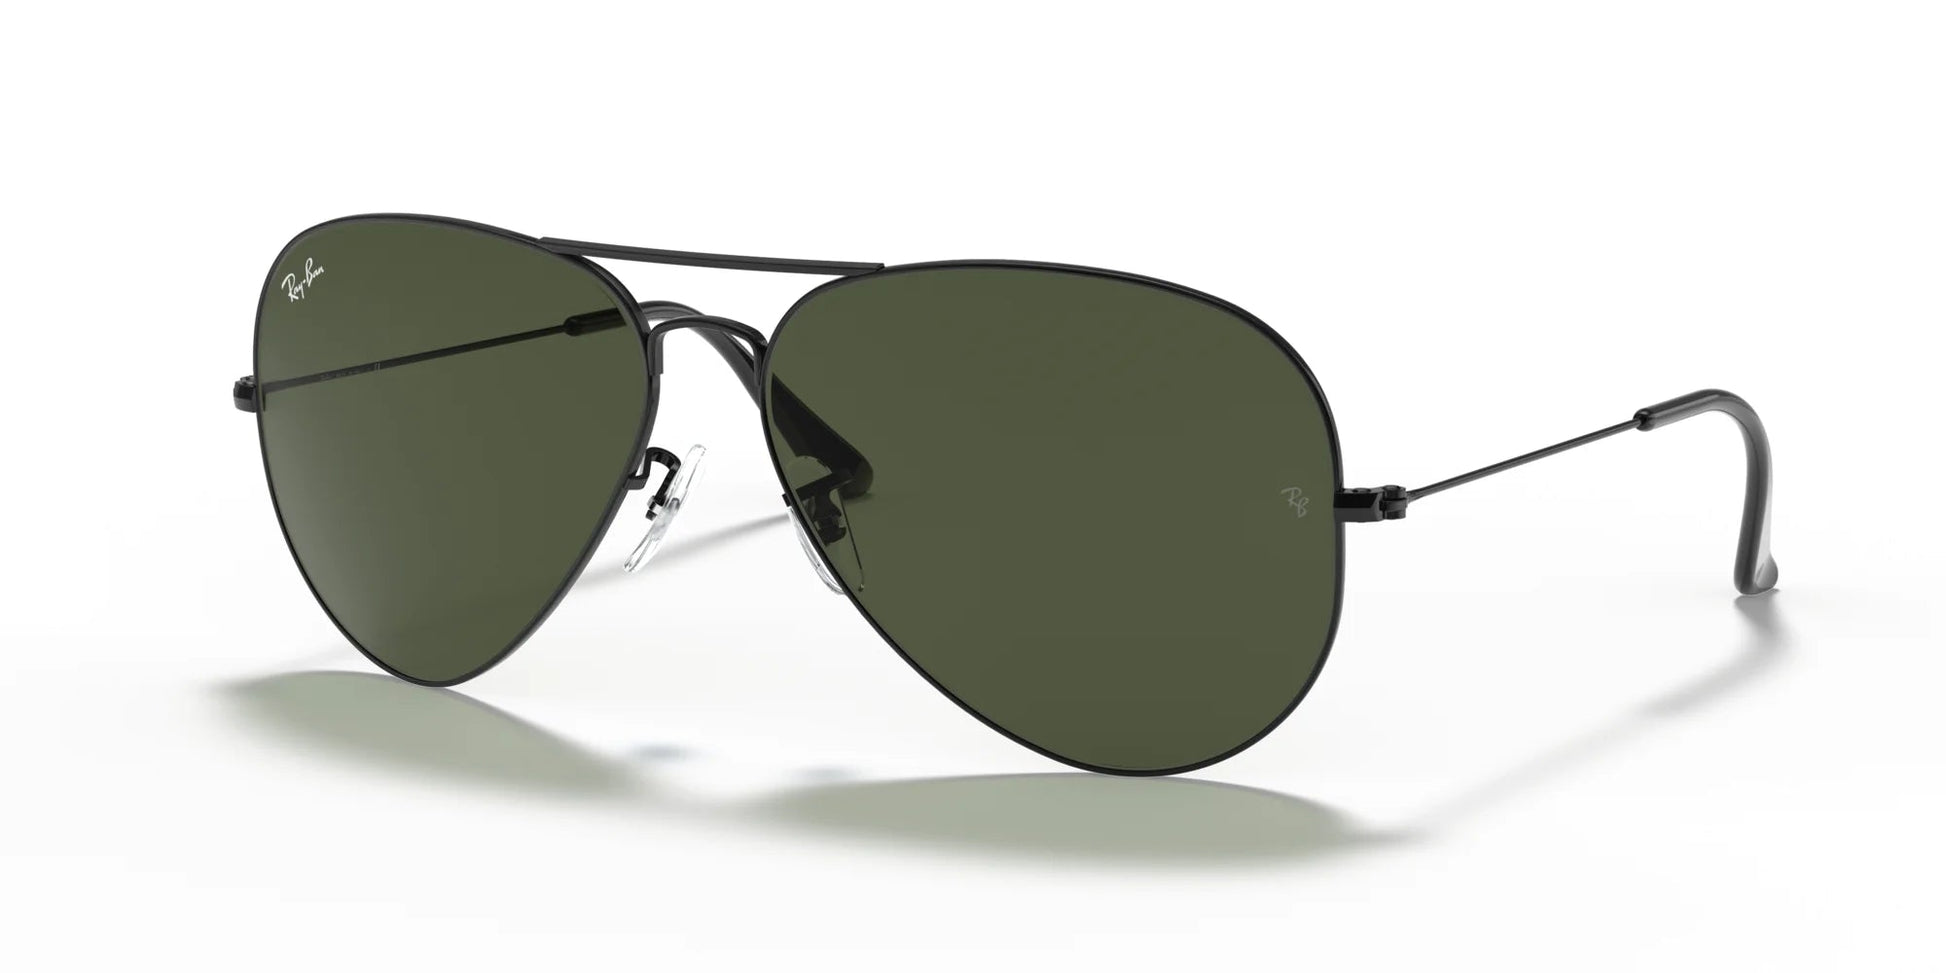 Ray-Ban AVIATOR LARGE METAL II RB3026 Sunglasses Black / Green